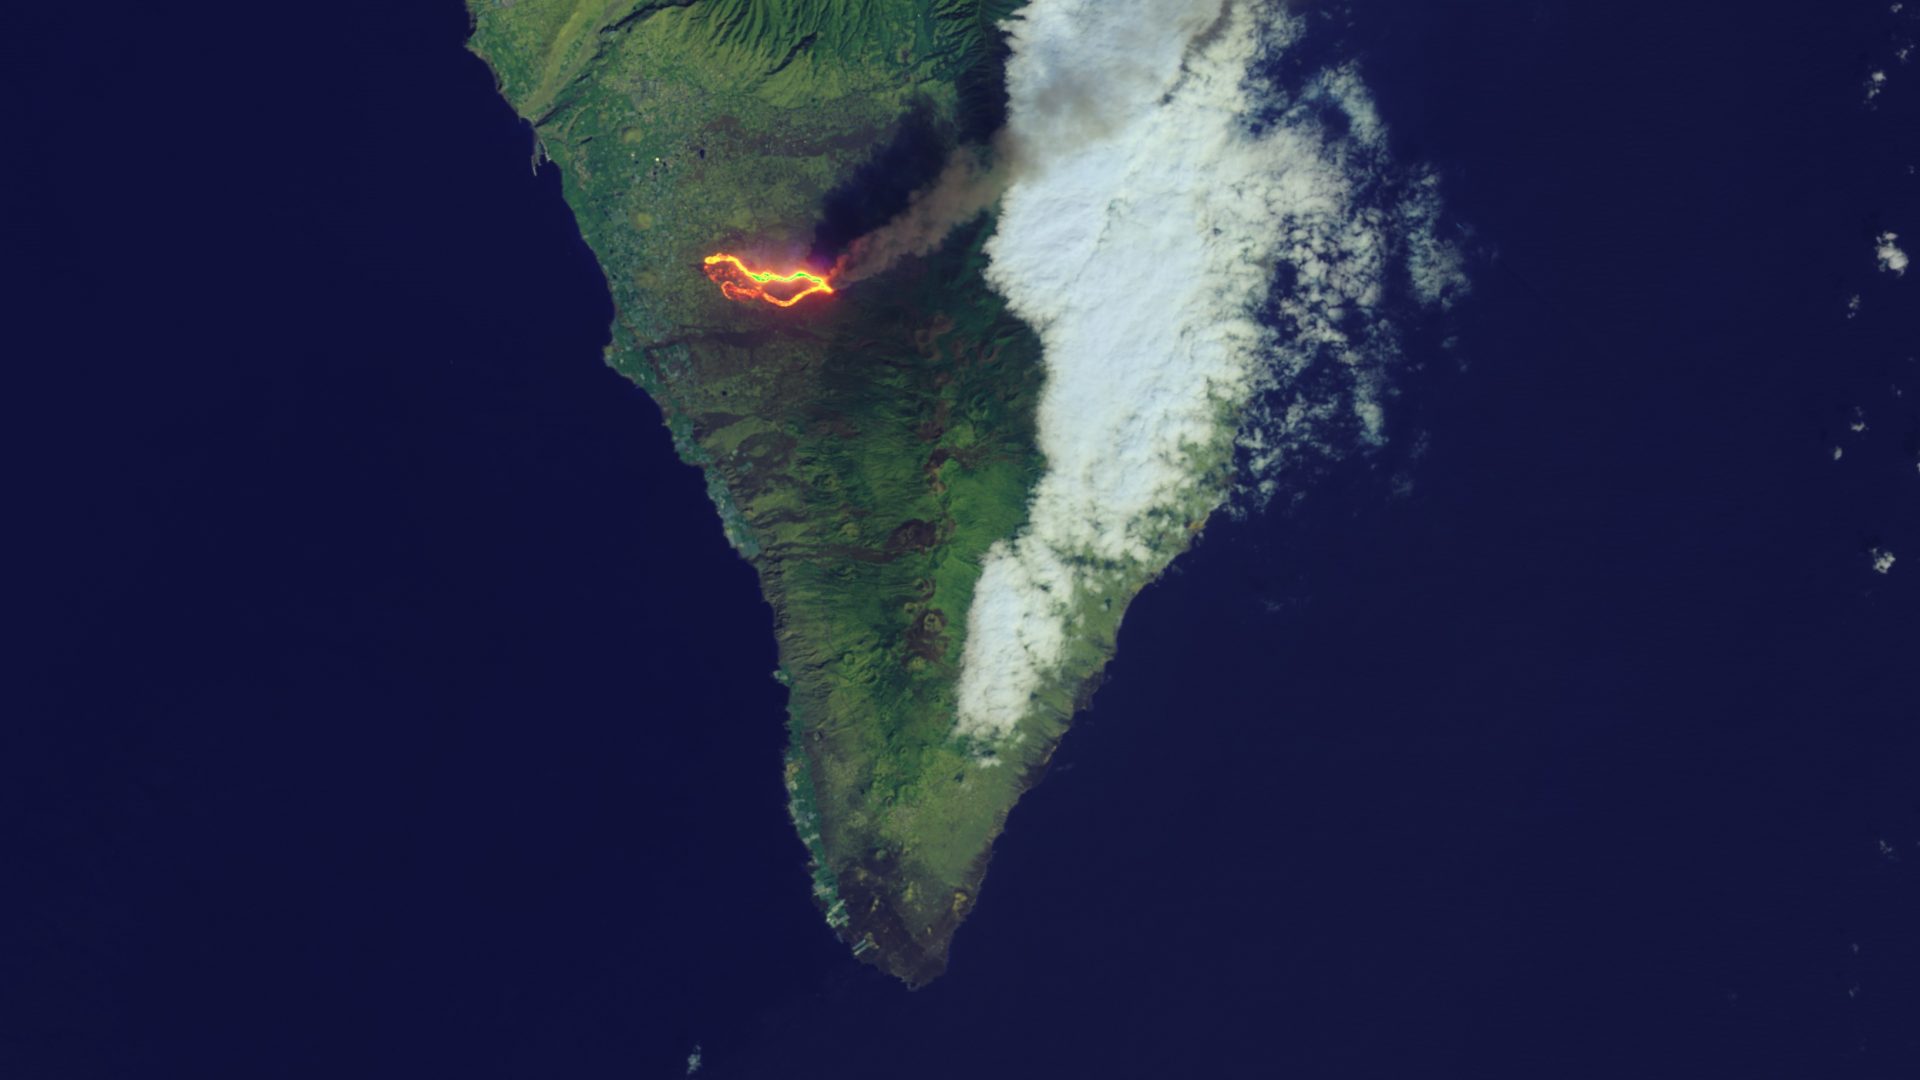 Vivid lava flows, smoke pour from La Palma volcano eruption in sleek Landsat photos